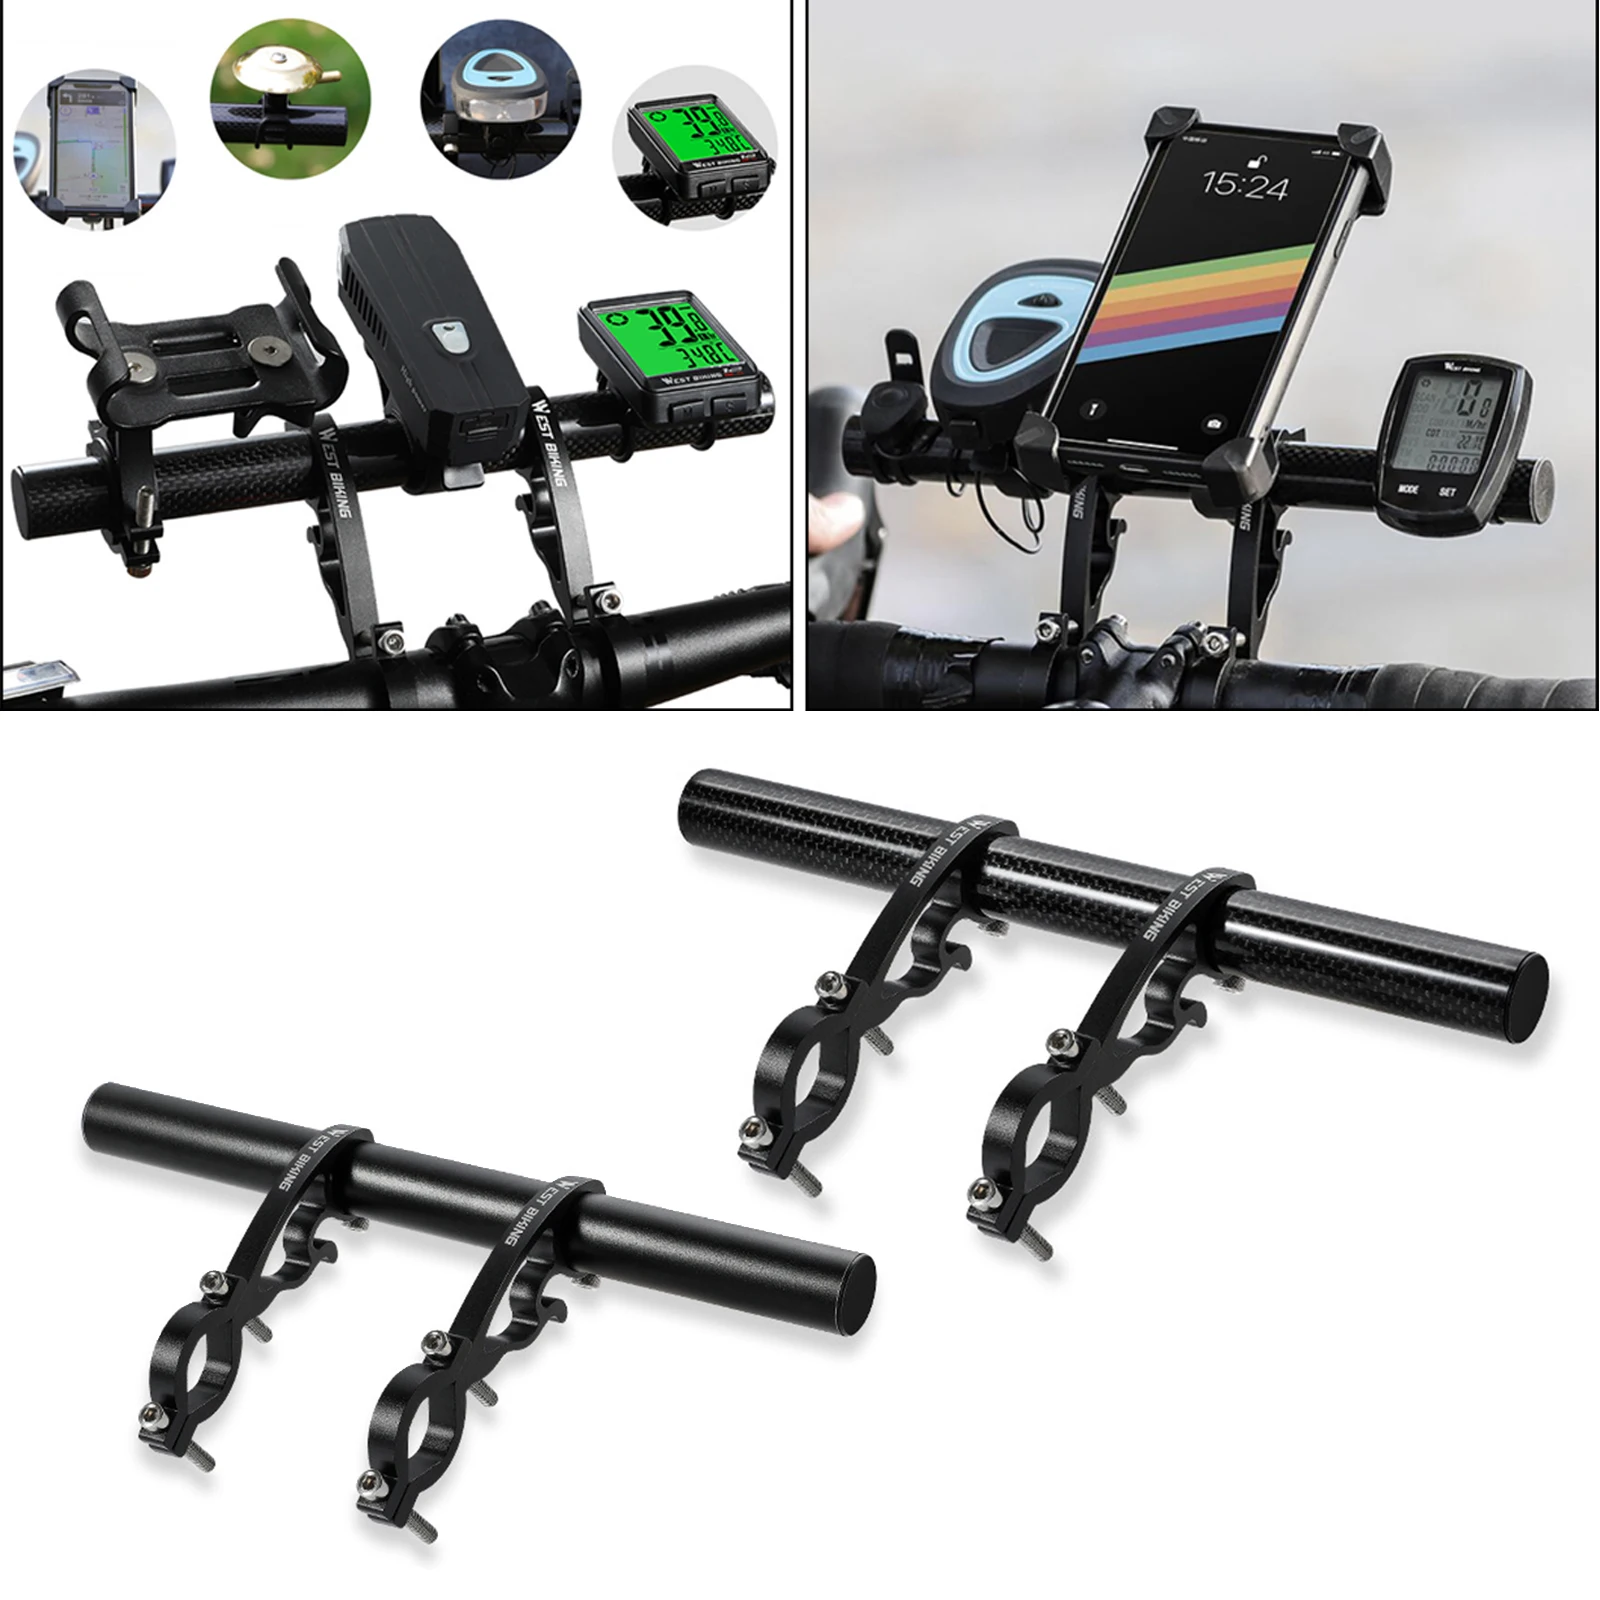 MTB Bike Handlebar Extender, Road Bicycle Handlebar Extension Bracket Holder for Lights Speedometer GPS Phone Mount Rack